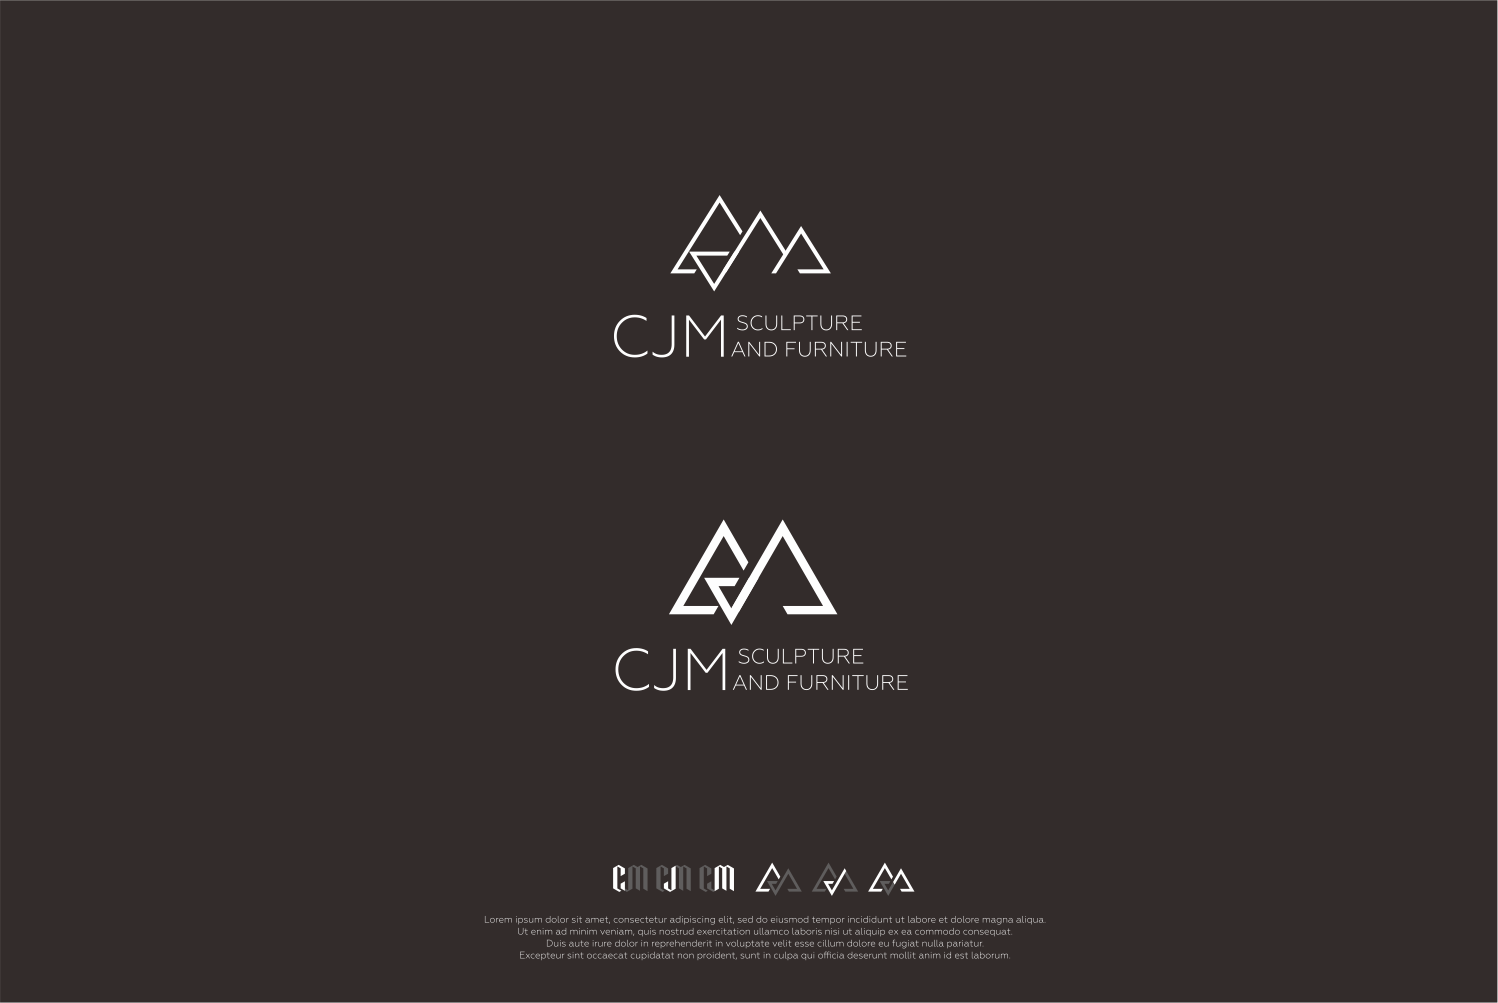 Sculpture Logo - Conservative, Serious, Manufacturing Logo Design for CJM Sculpture